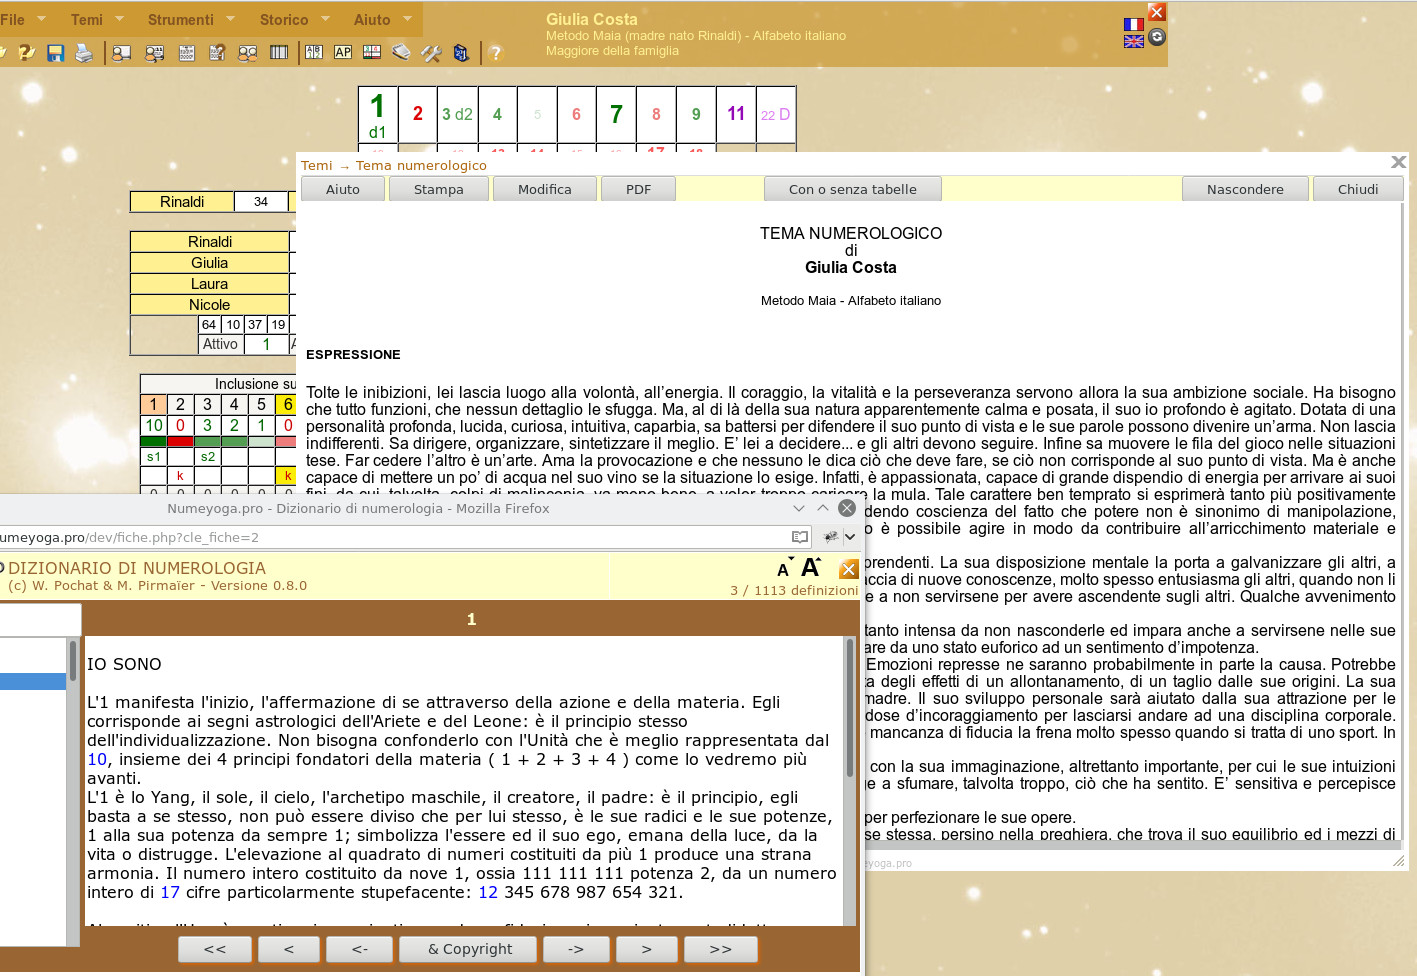 Online Numerologia Software